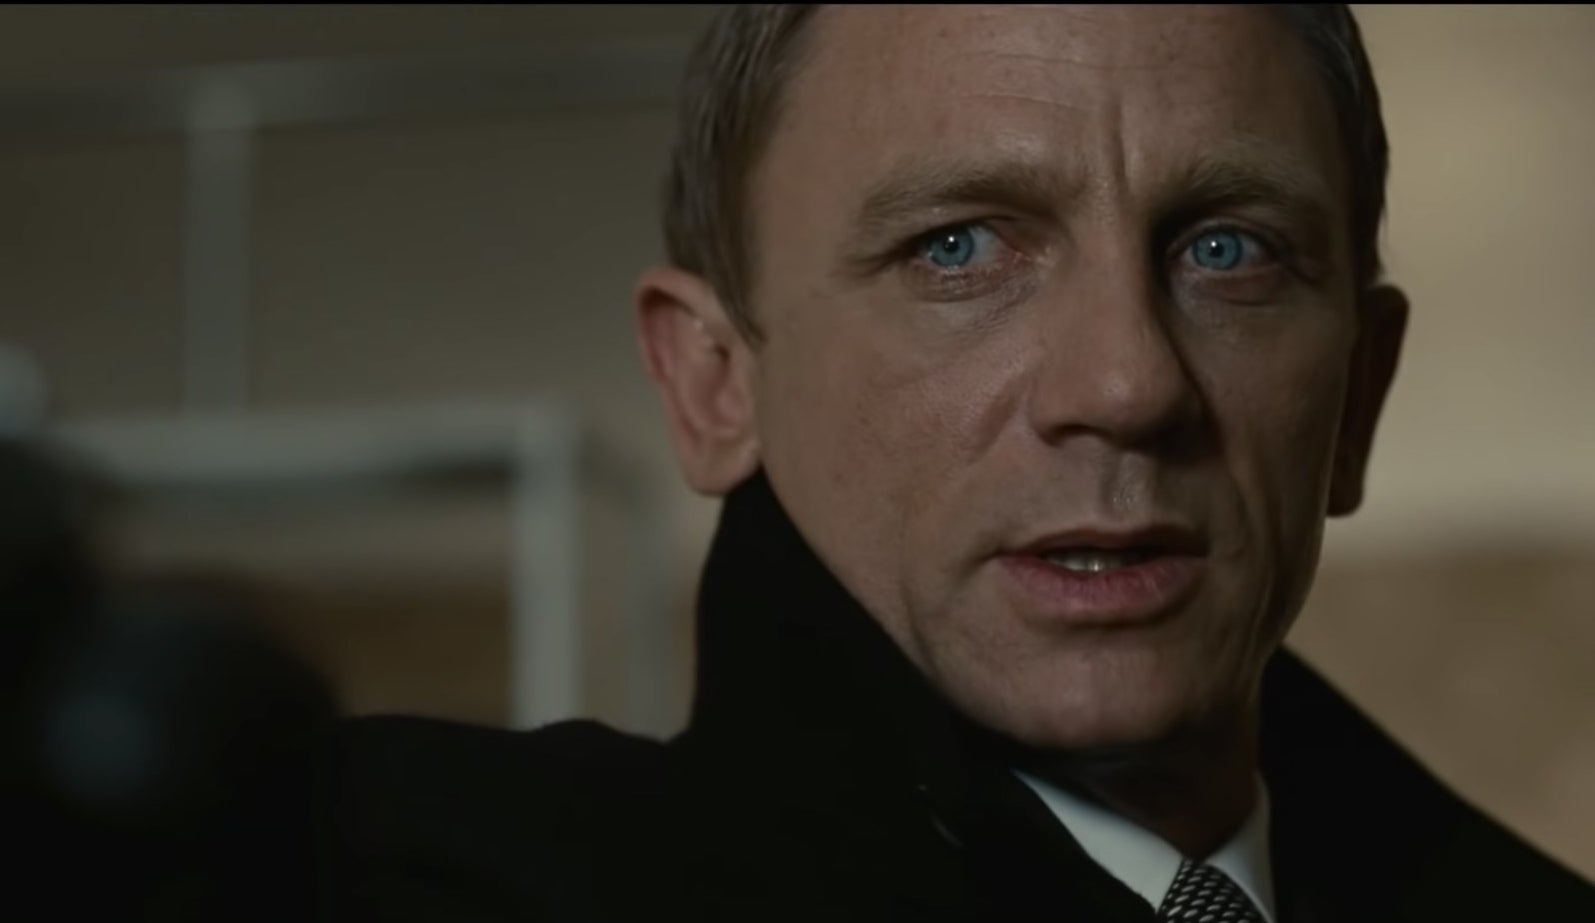 Daniel Craig in a black trench coat looks off-screen.